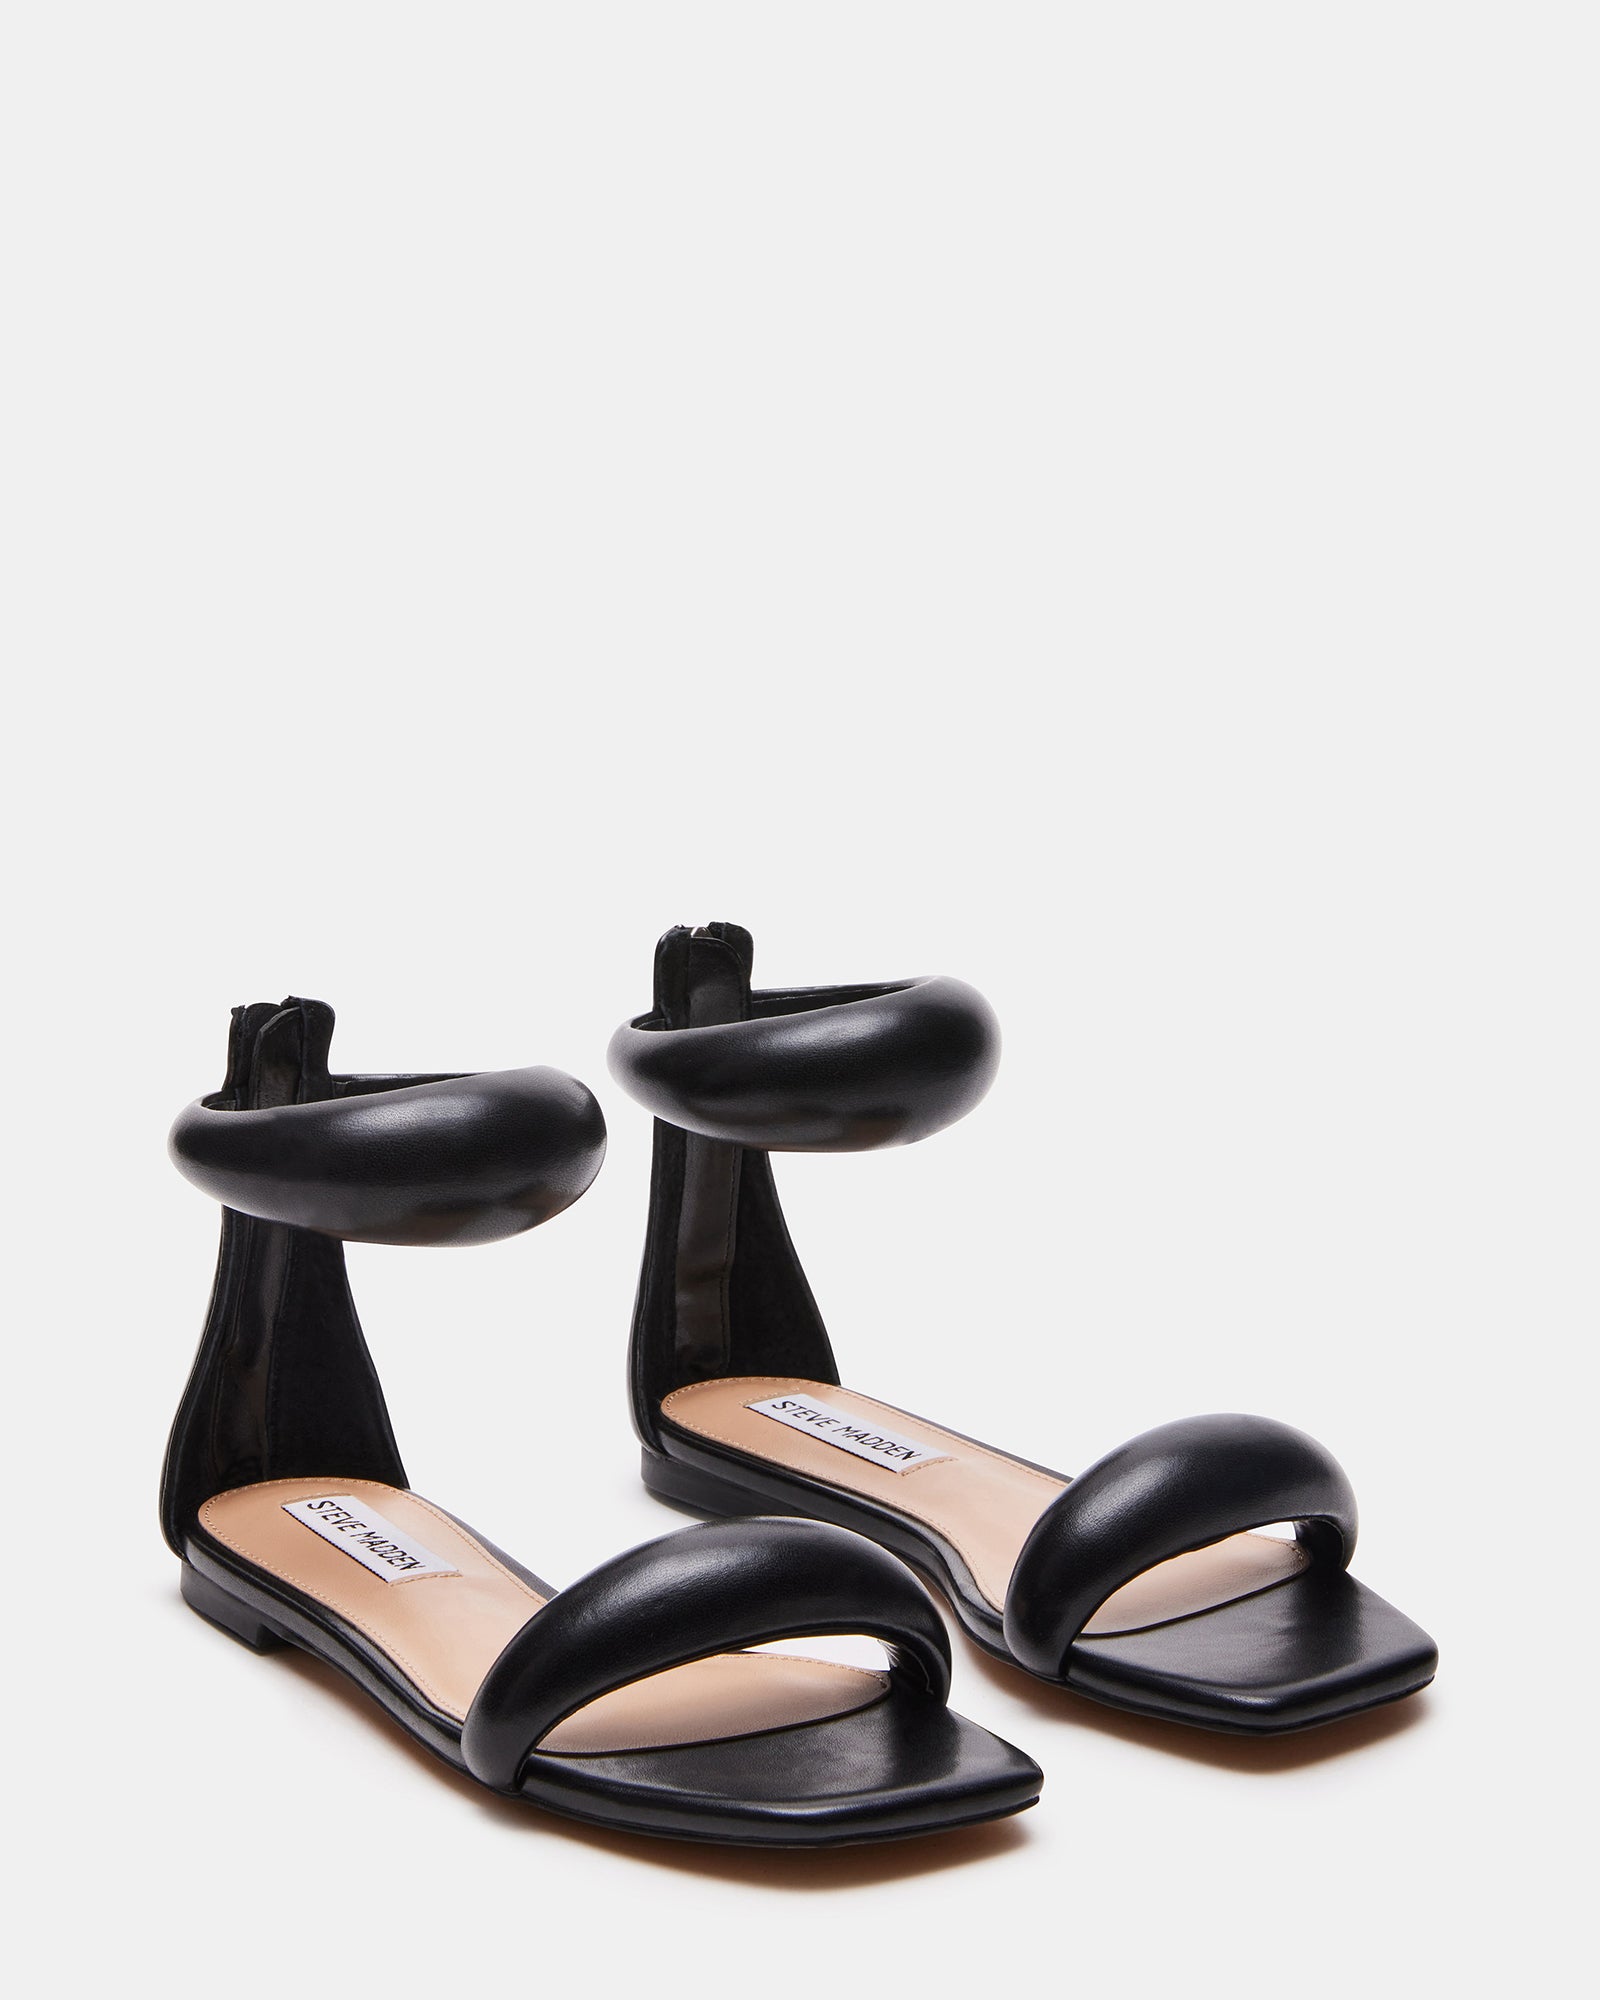 CAPELLA Black Square Toe Sandal | Women's Sandals – Steve Madden